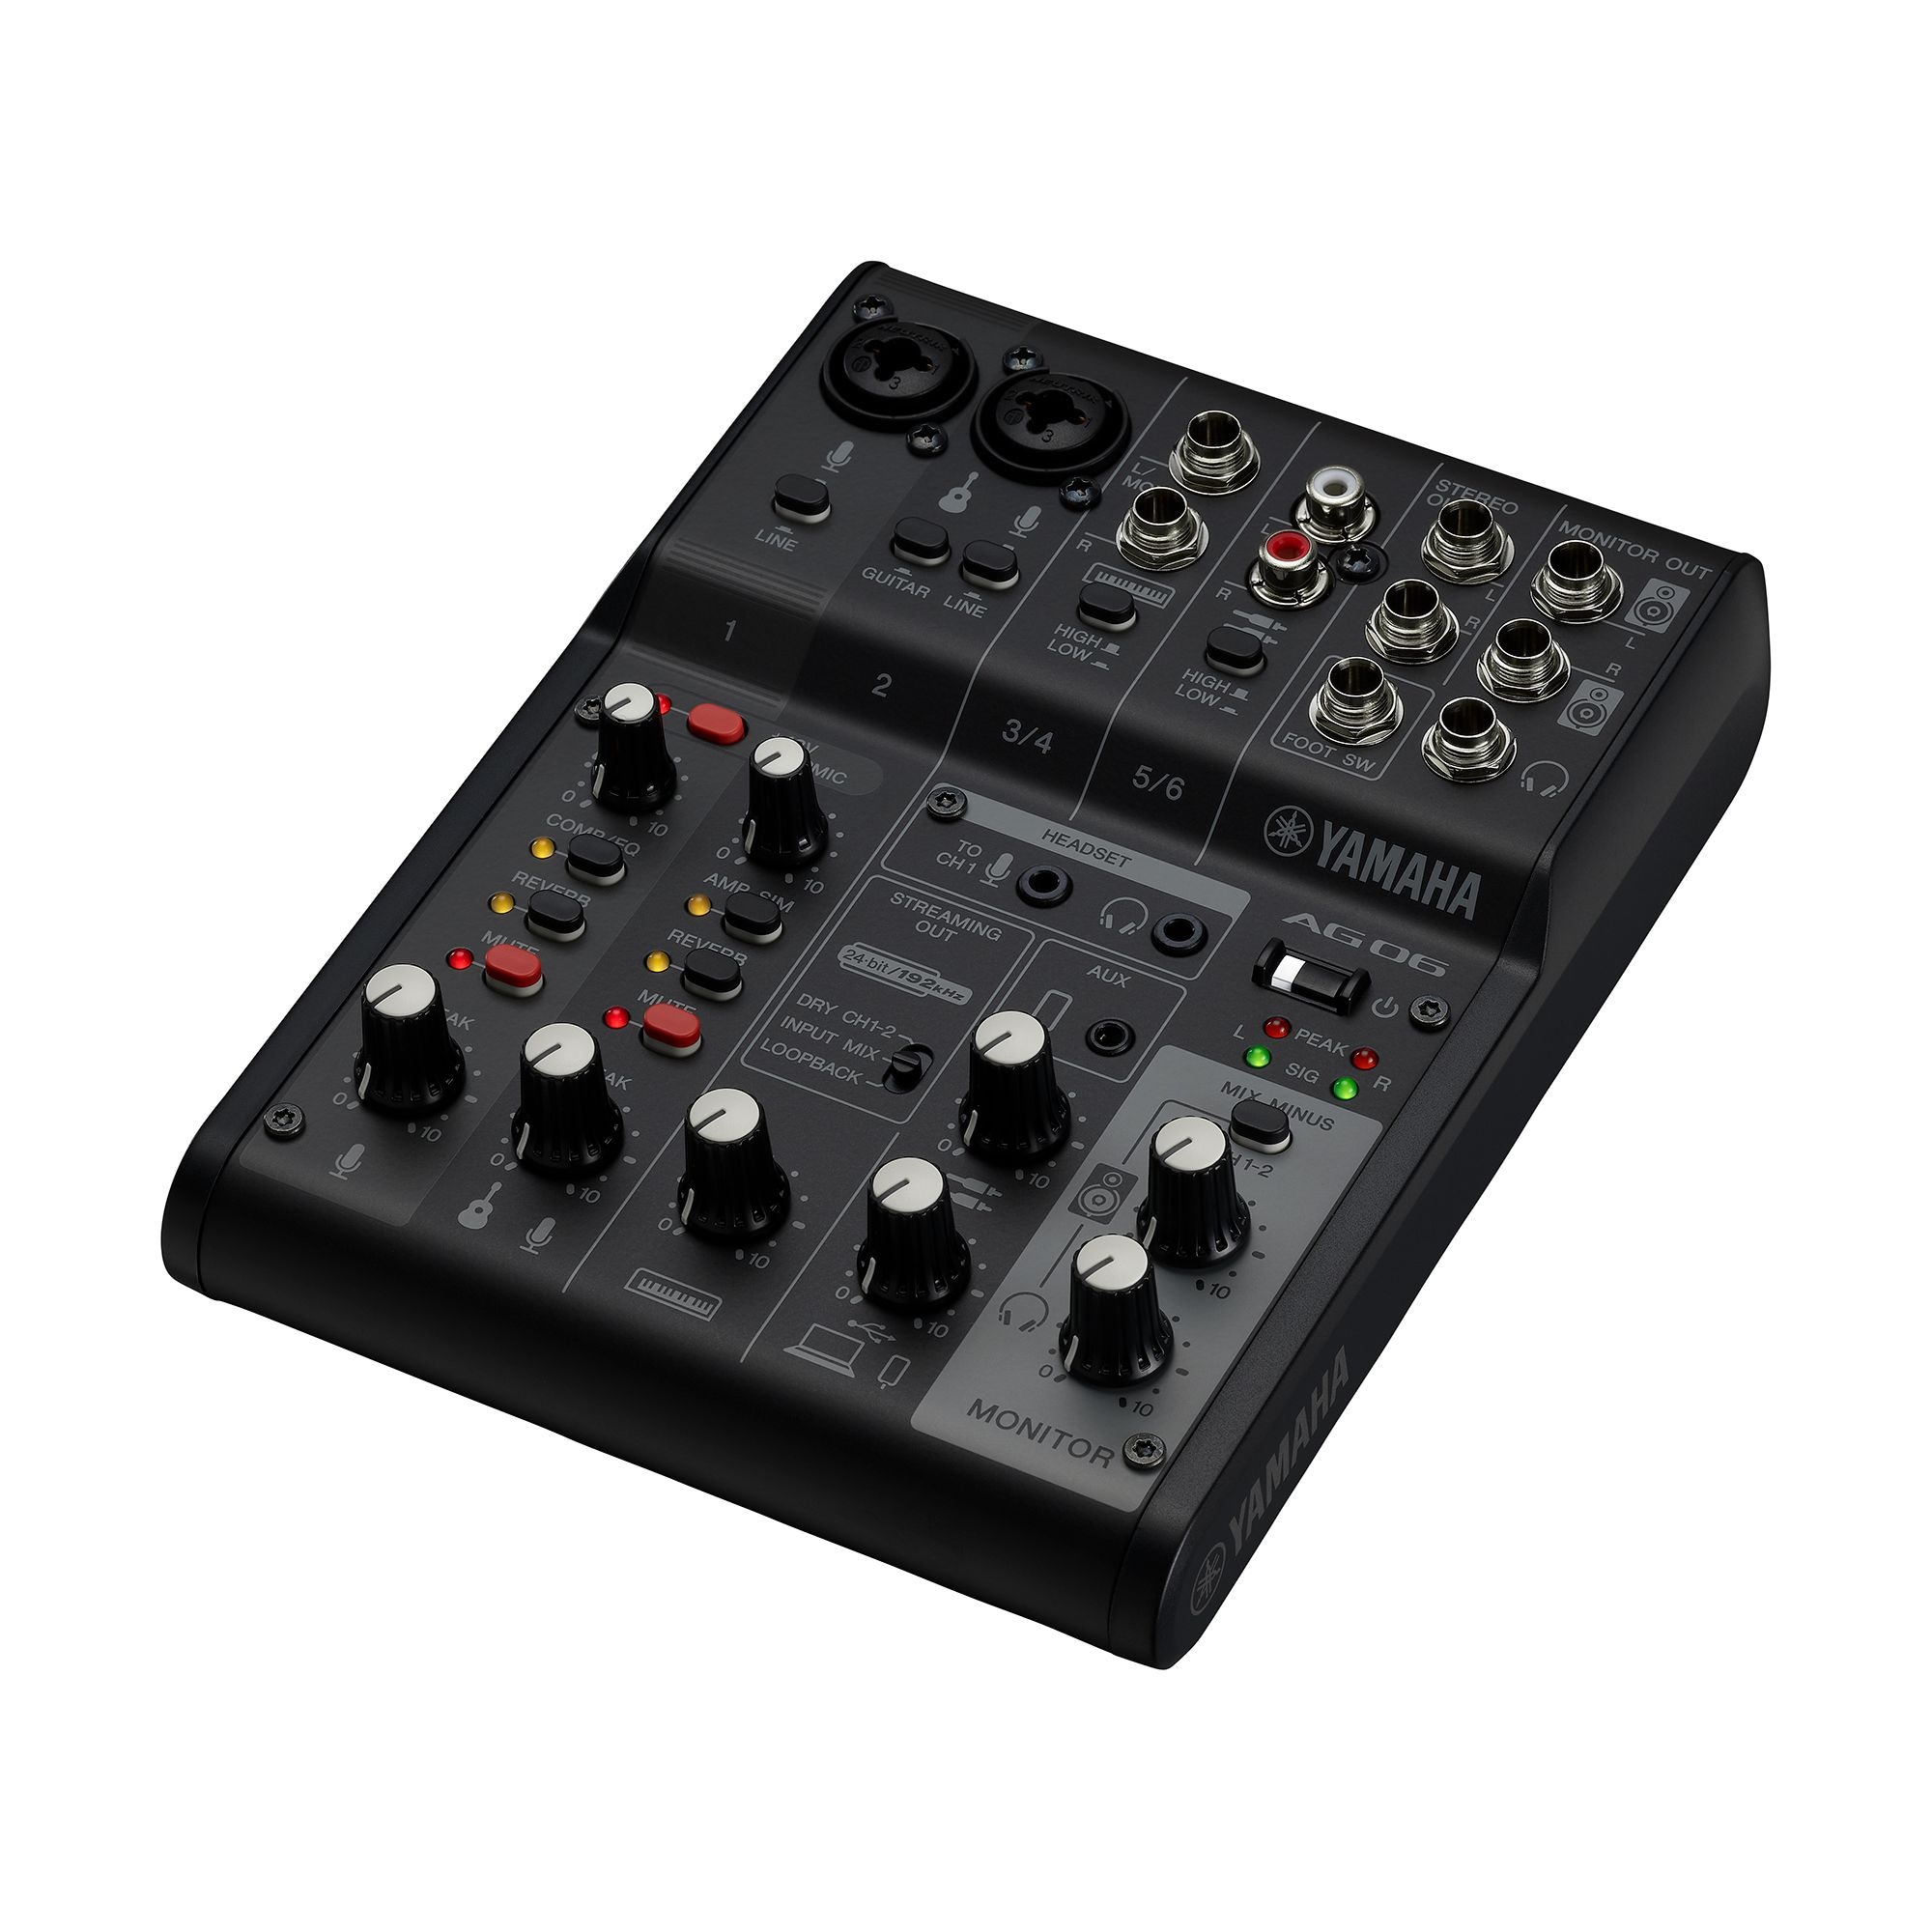 Yamaha Ag06 Mixer for podcasting